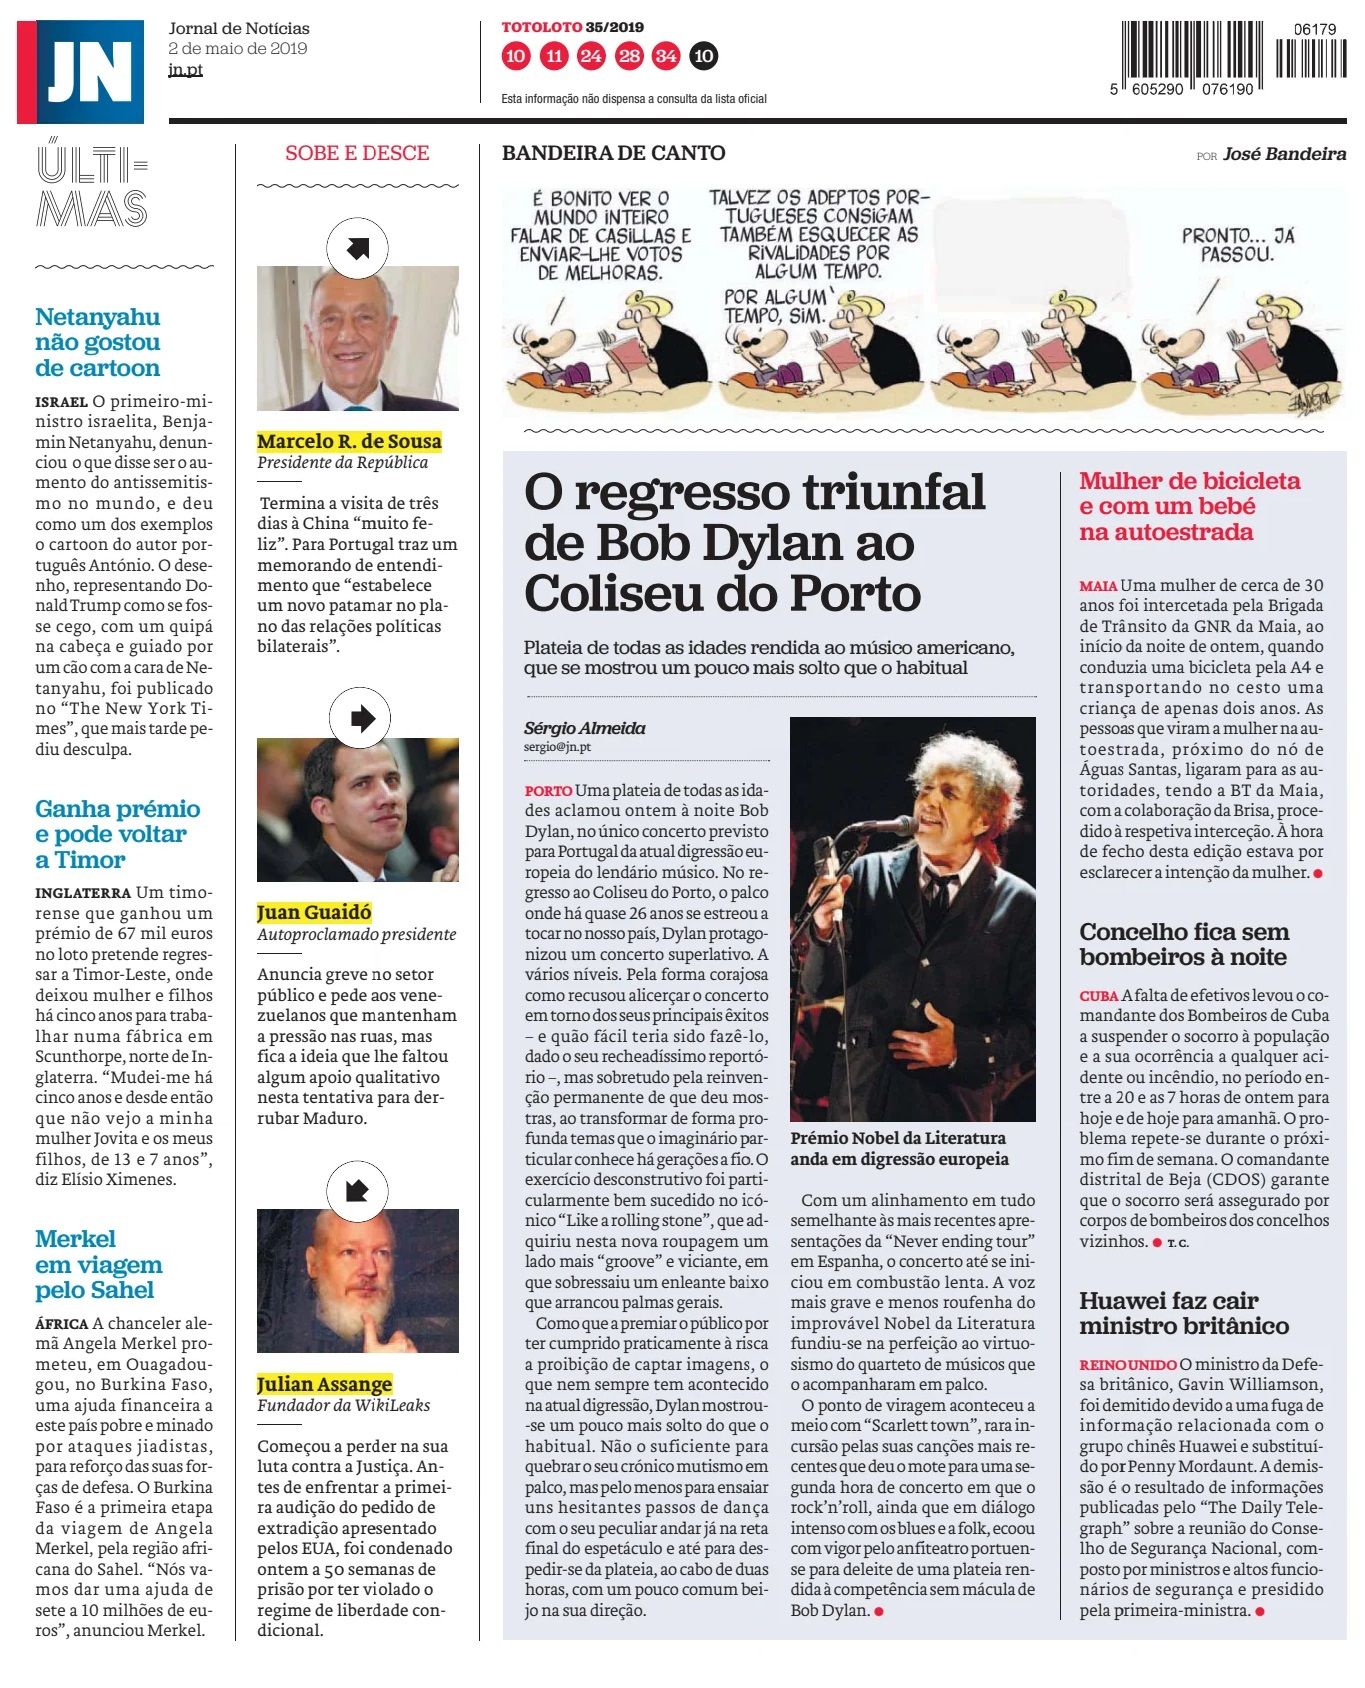 Jornal de Noticias 2 May 2019 Bob Dylan cover story